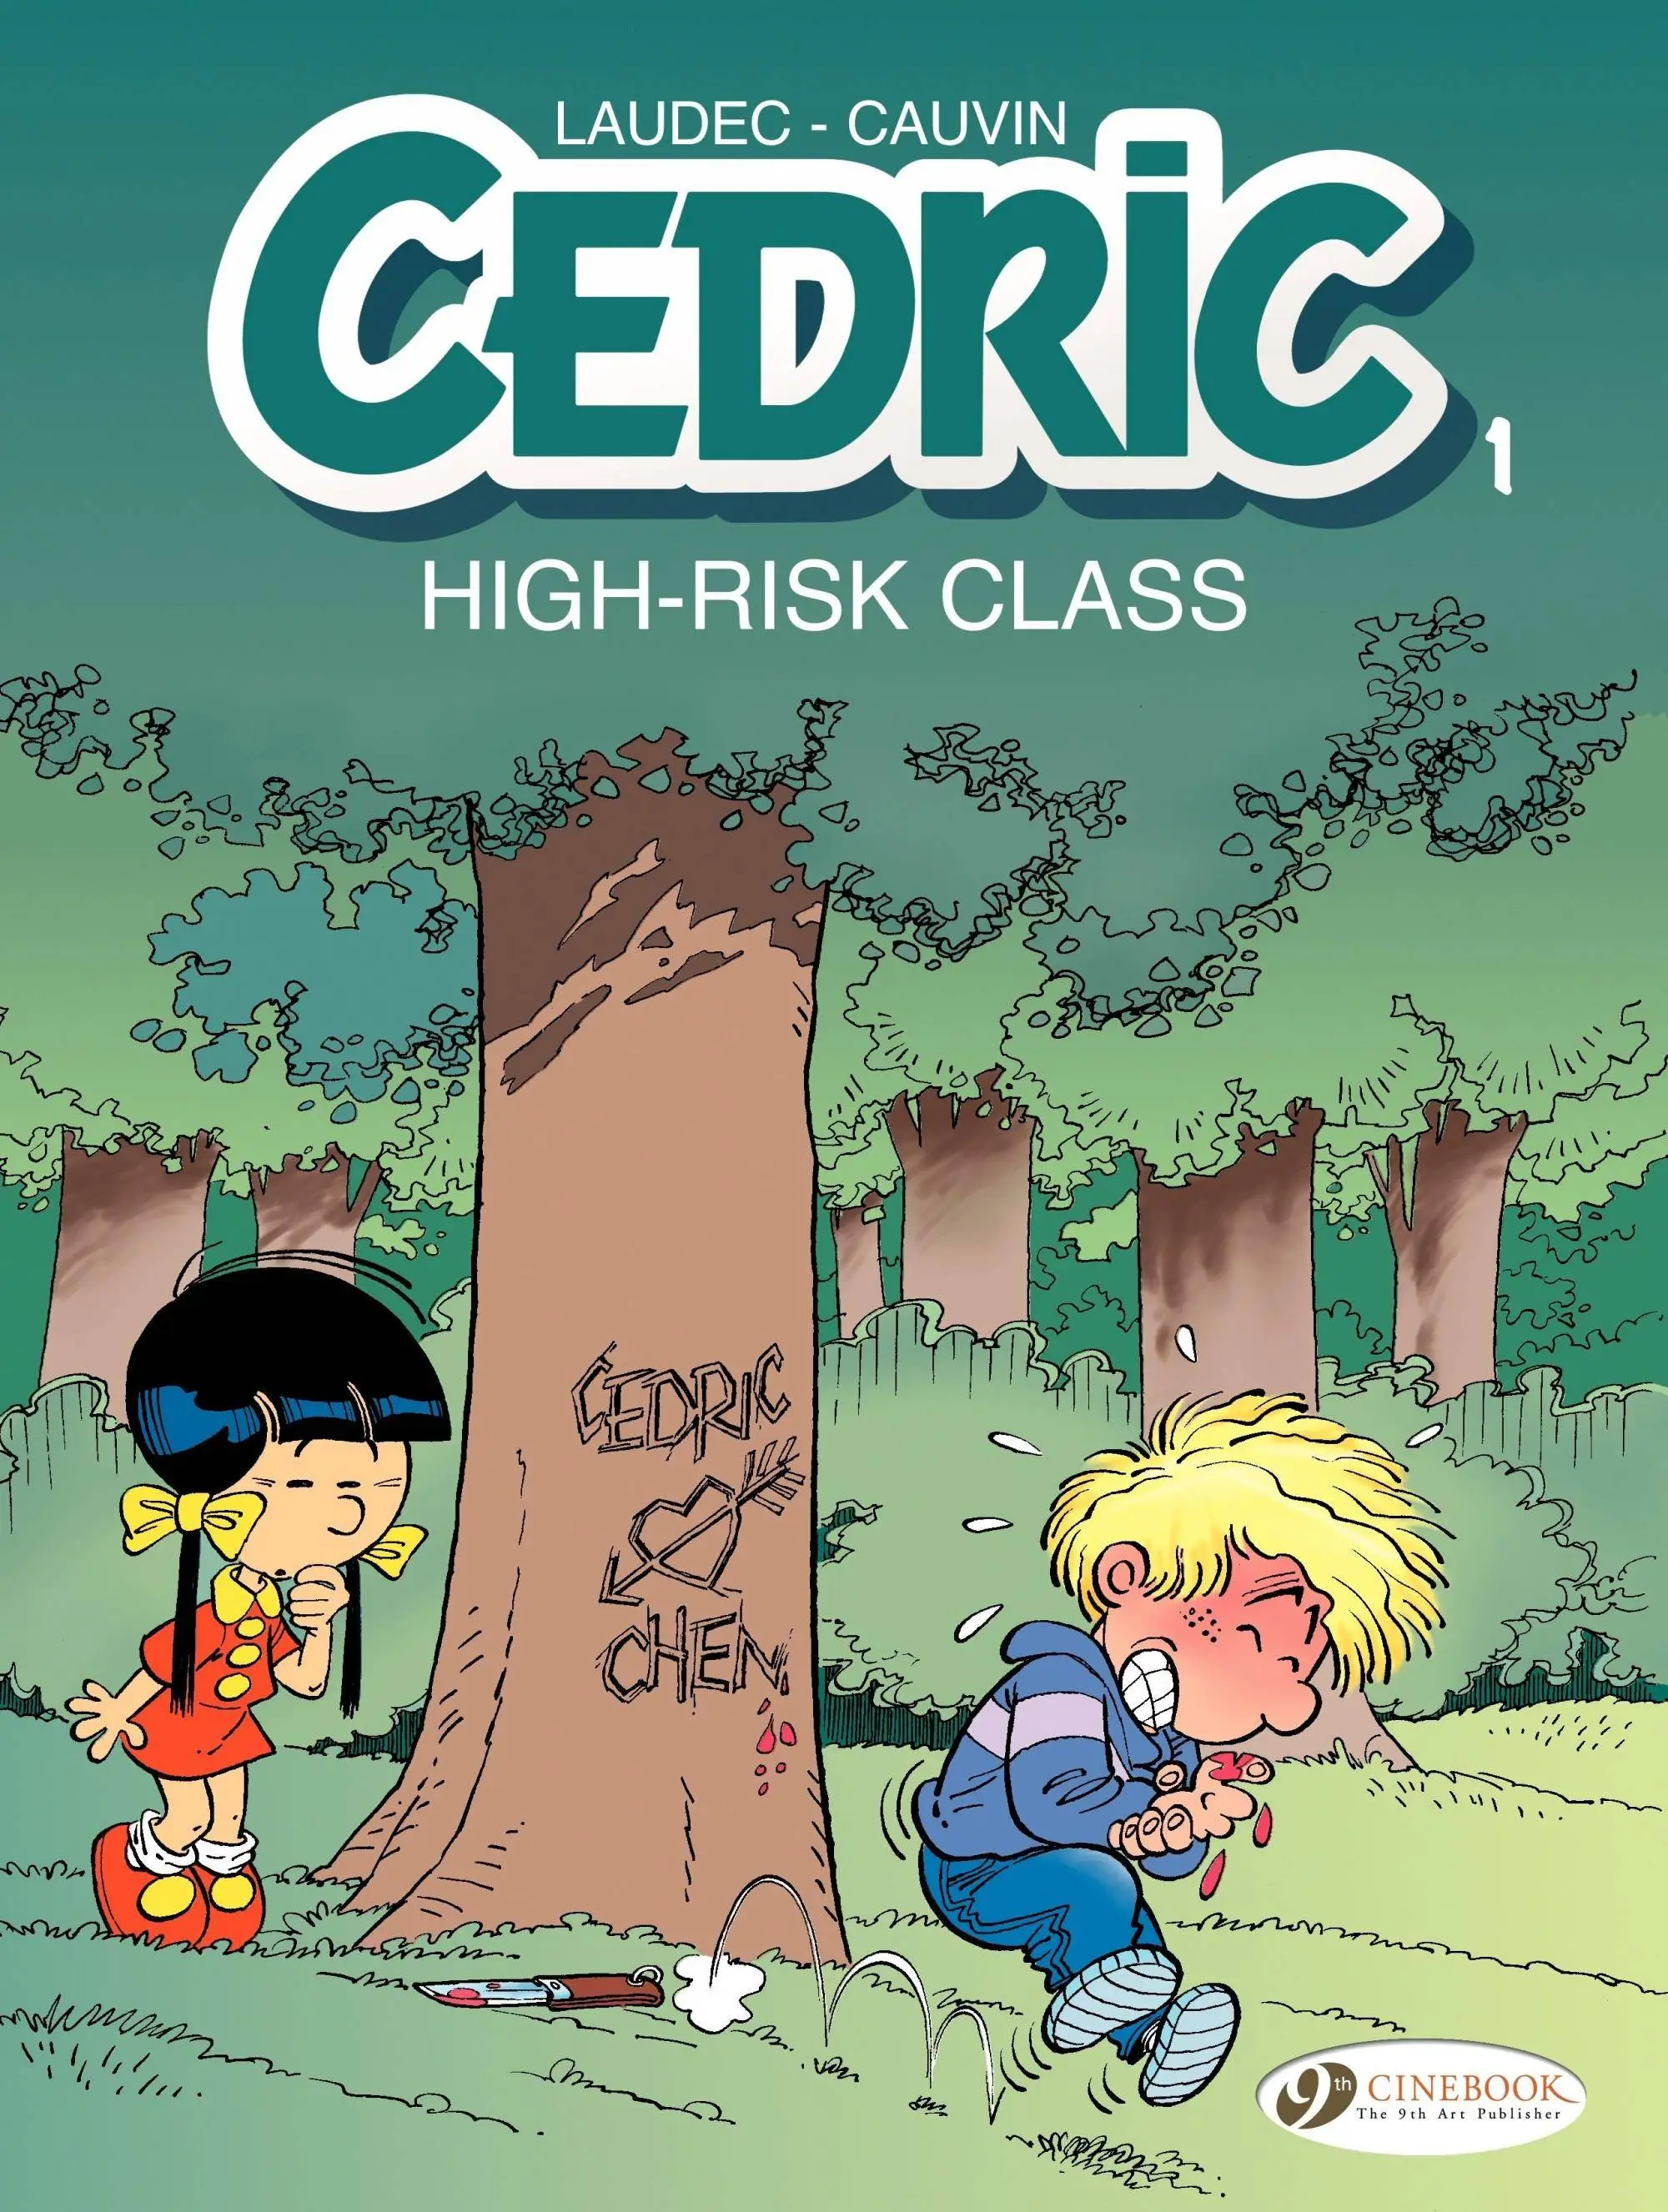 New Releases 2015 4 3 Cedric 001 High Risk Class 2008 Cinebook digital HD Lynx Empire cbr